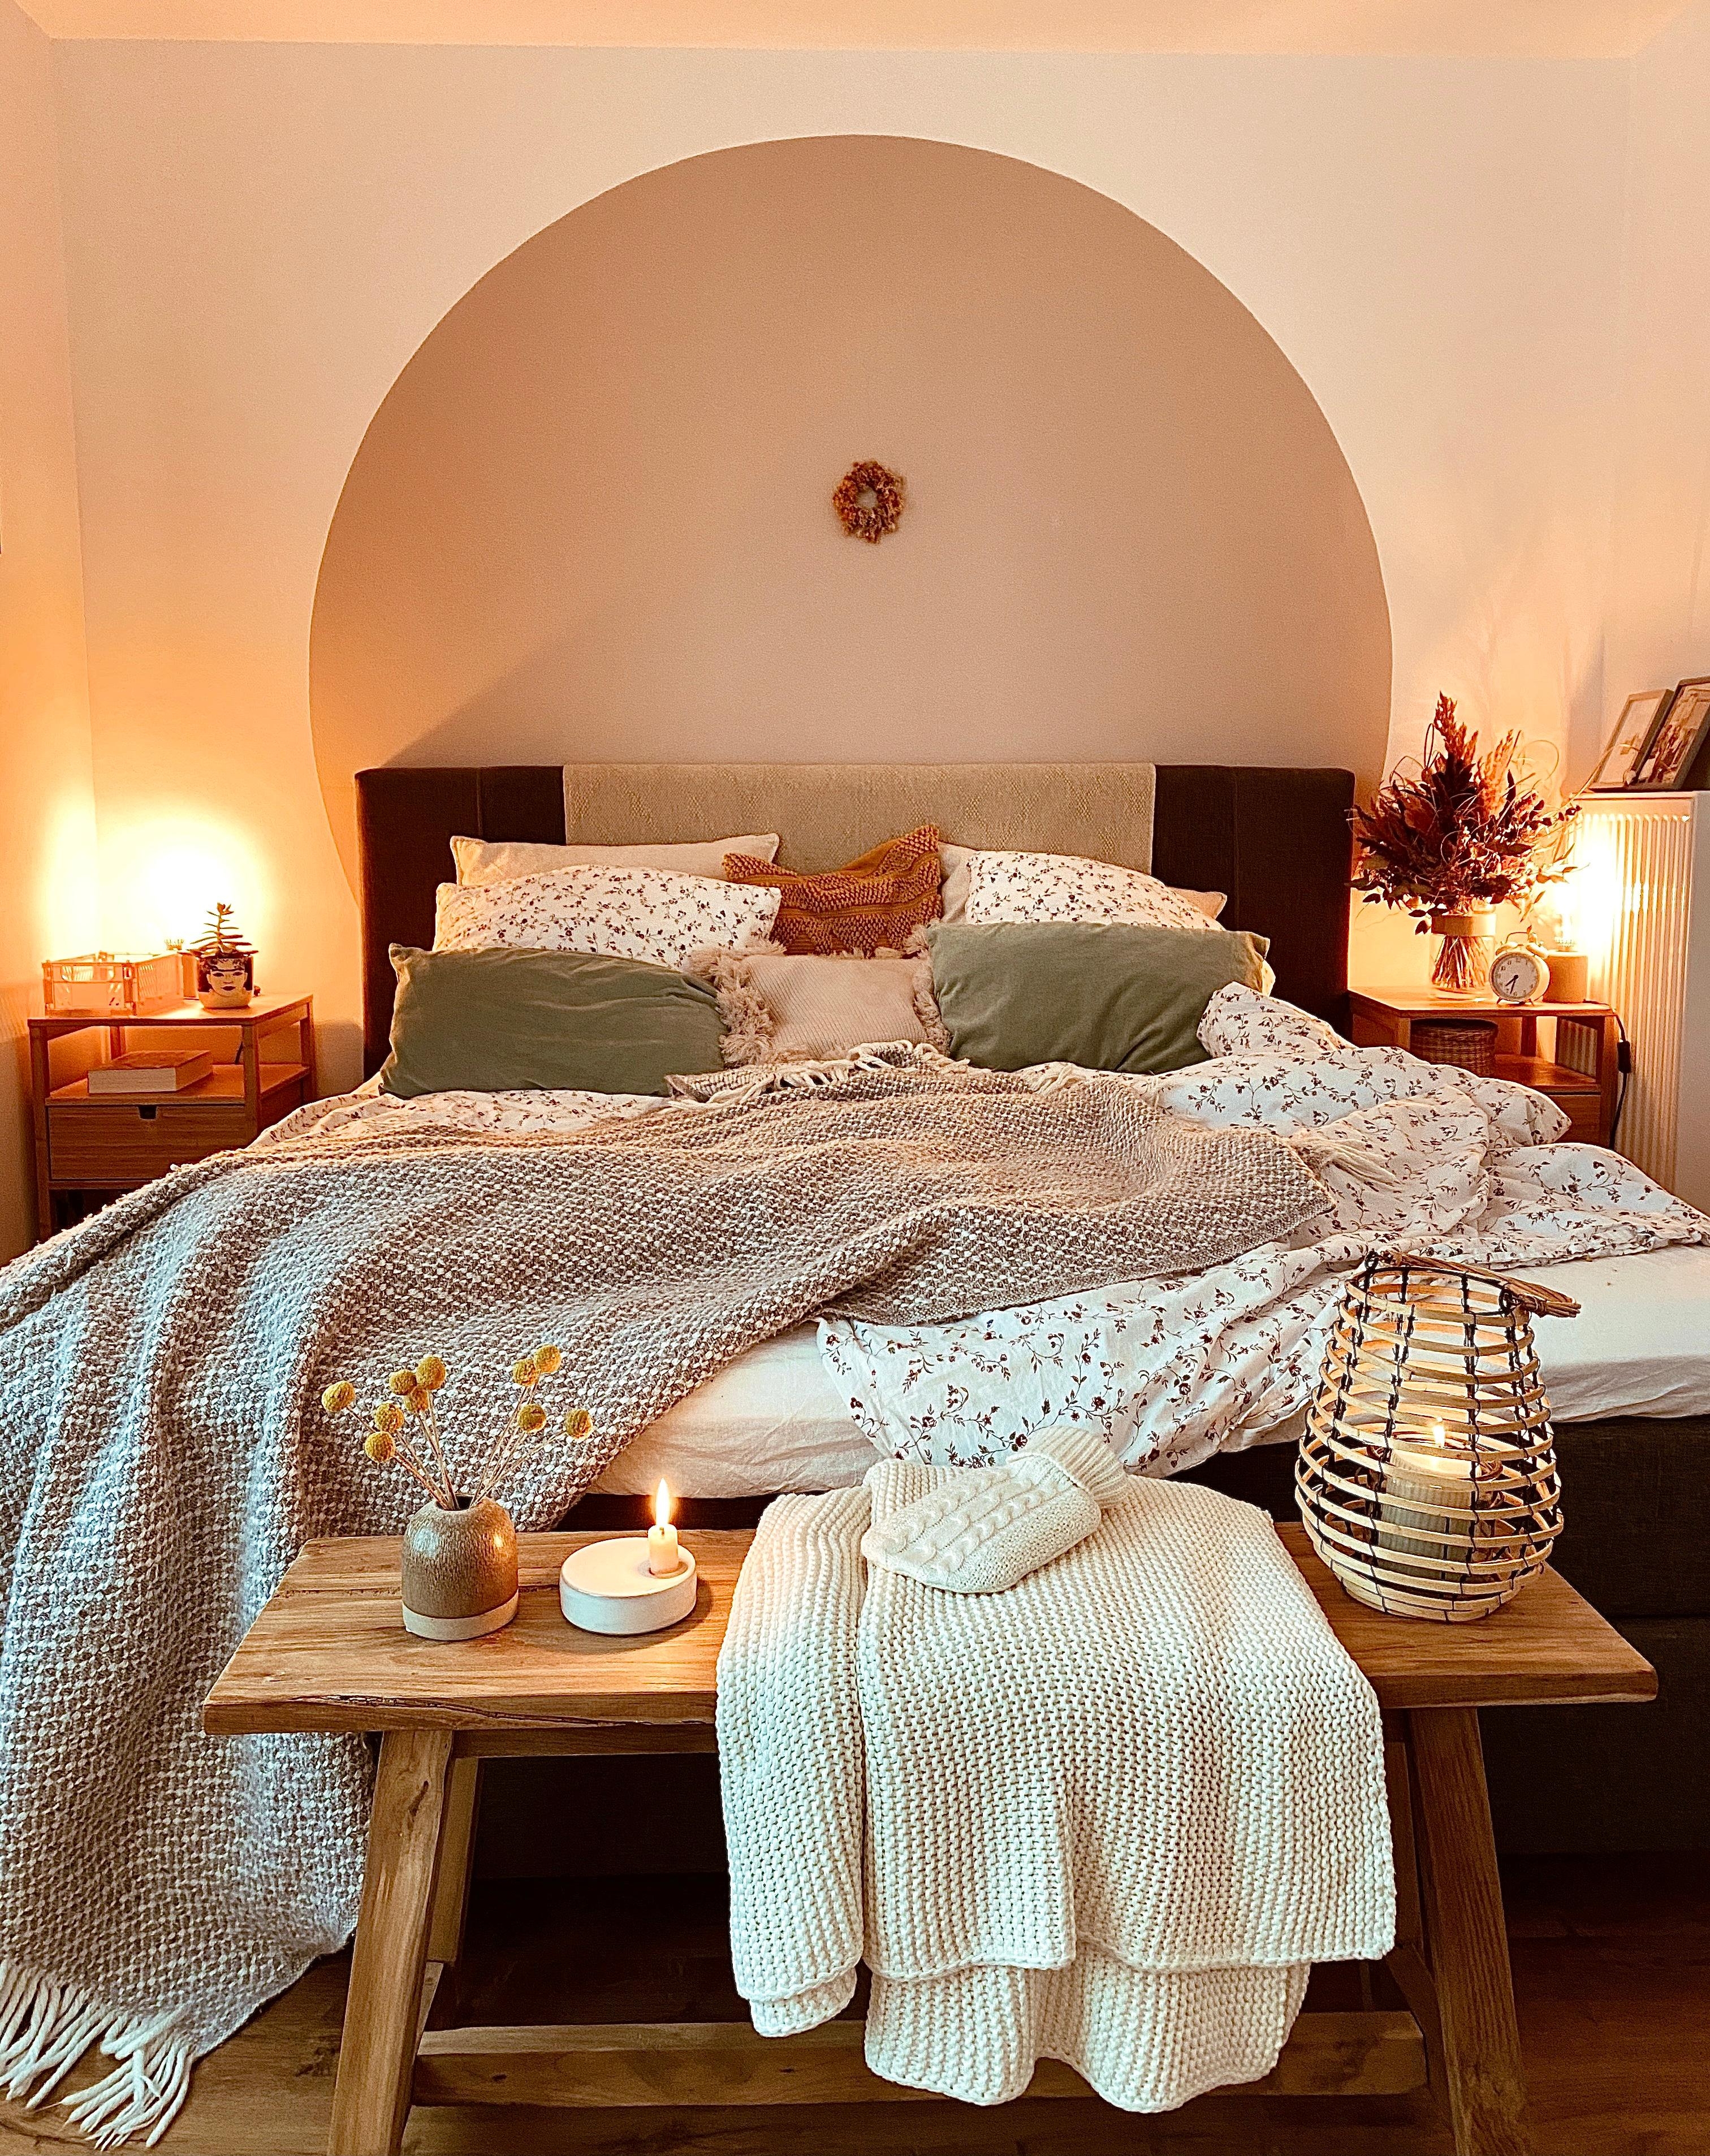 #couchliebe #couchmagazin #boholiving #bedroominspo #Schlafzimmerdekoration #interiorliebe